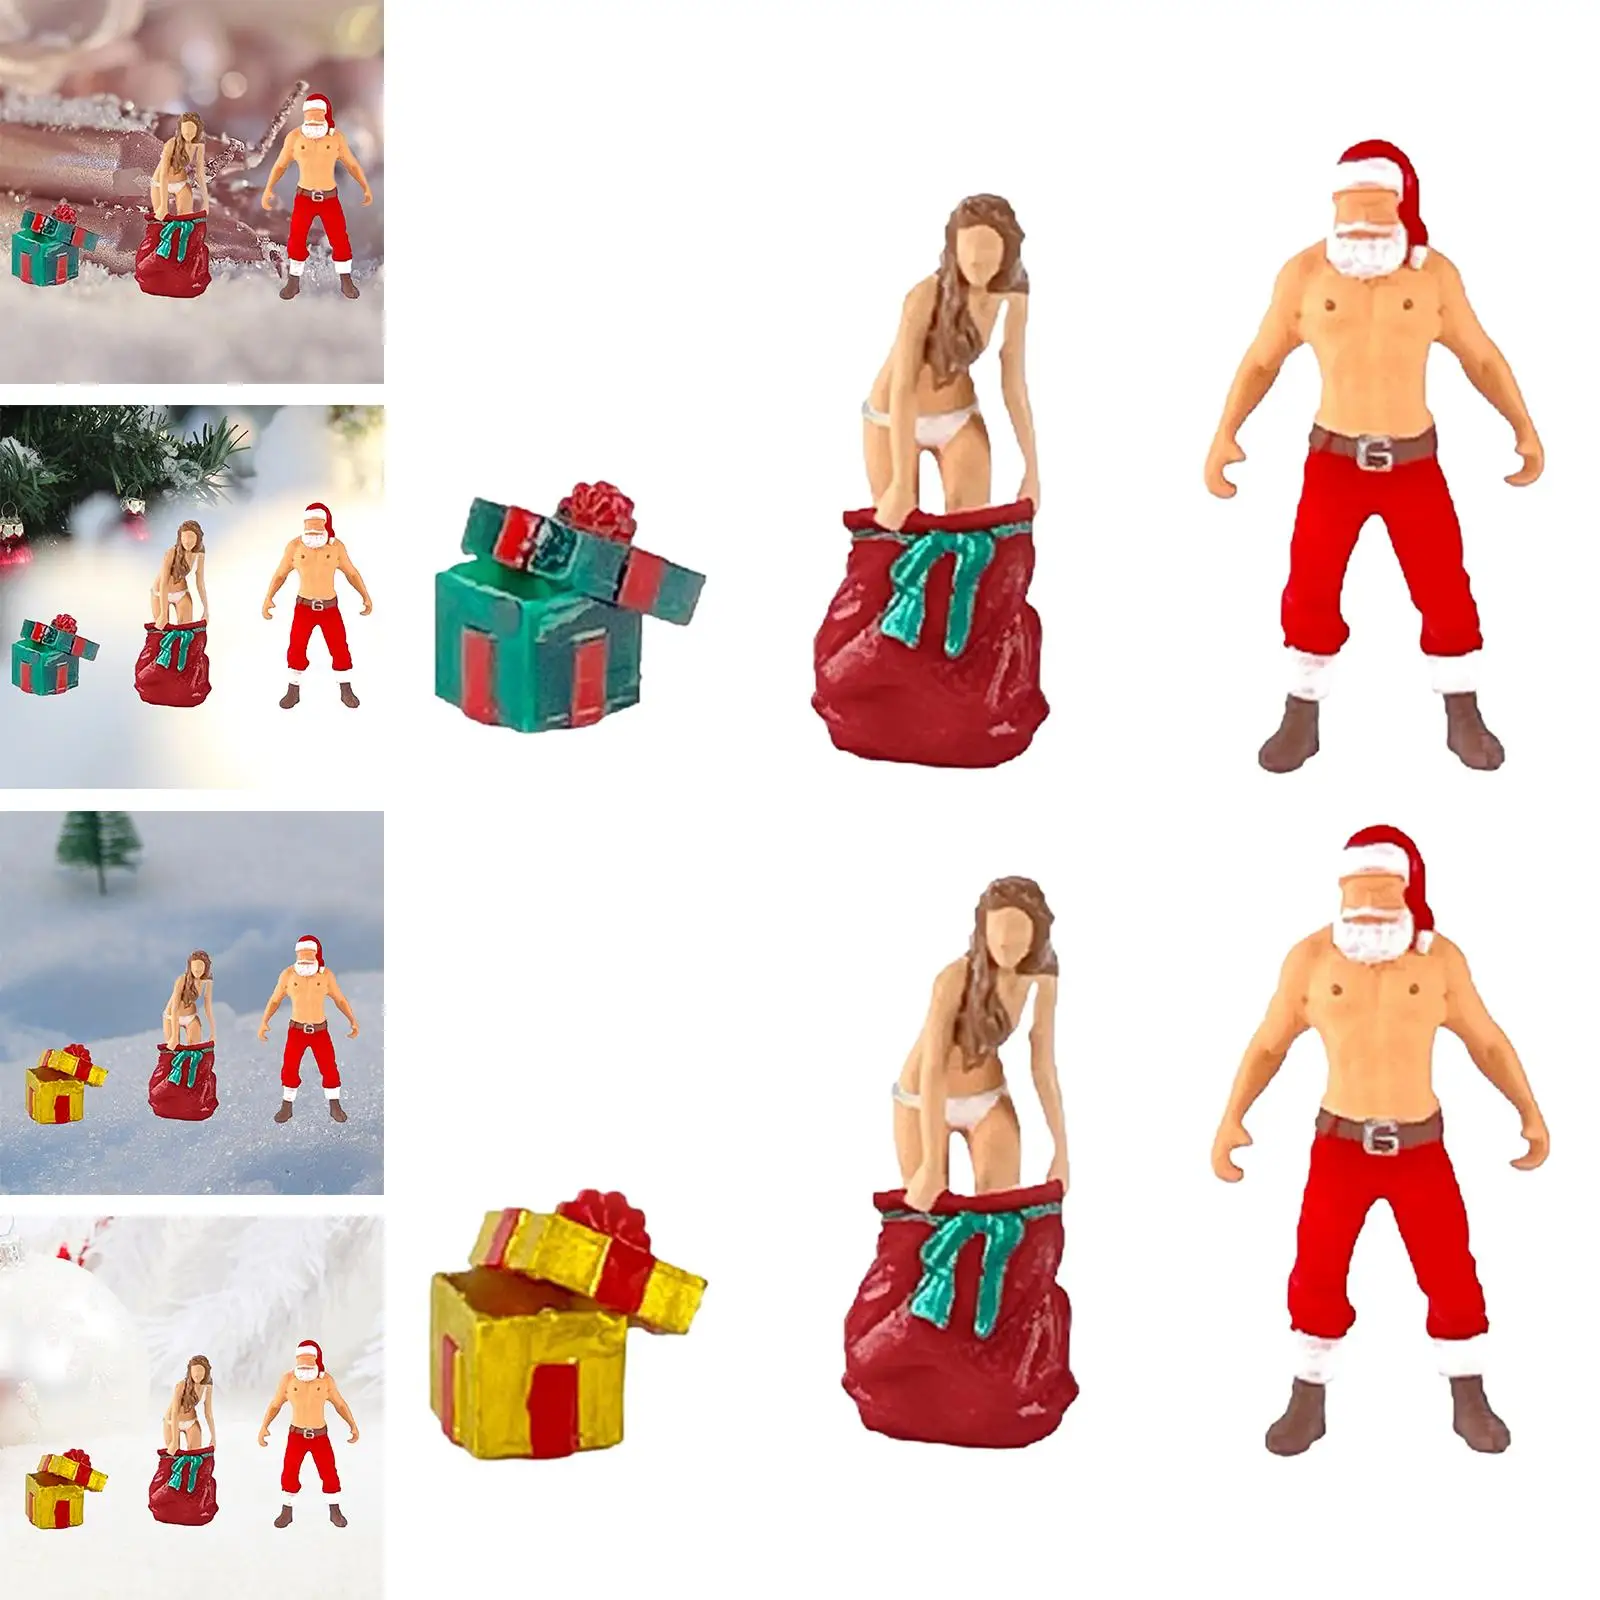 1/64 Diorama Christmas Scenes Figurines for Miniature Scene Dollhouse Decor